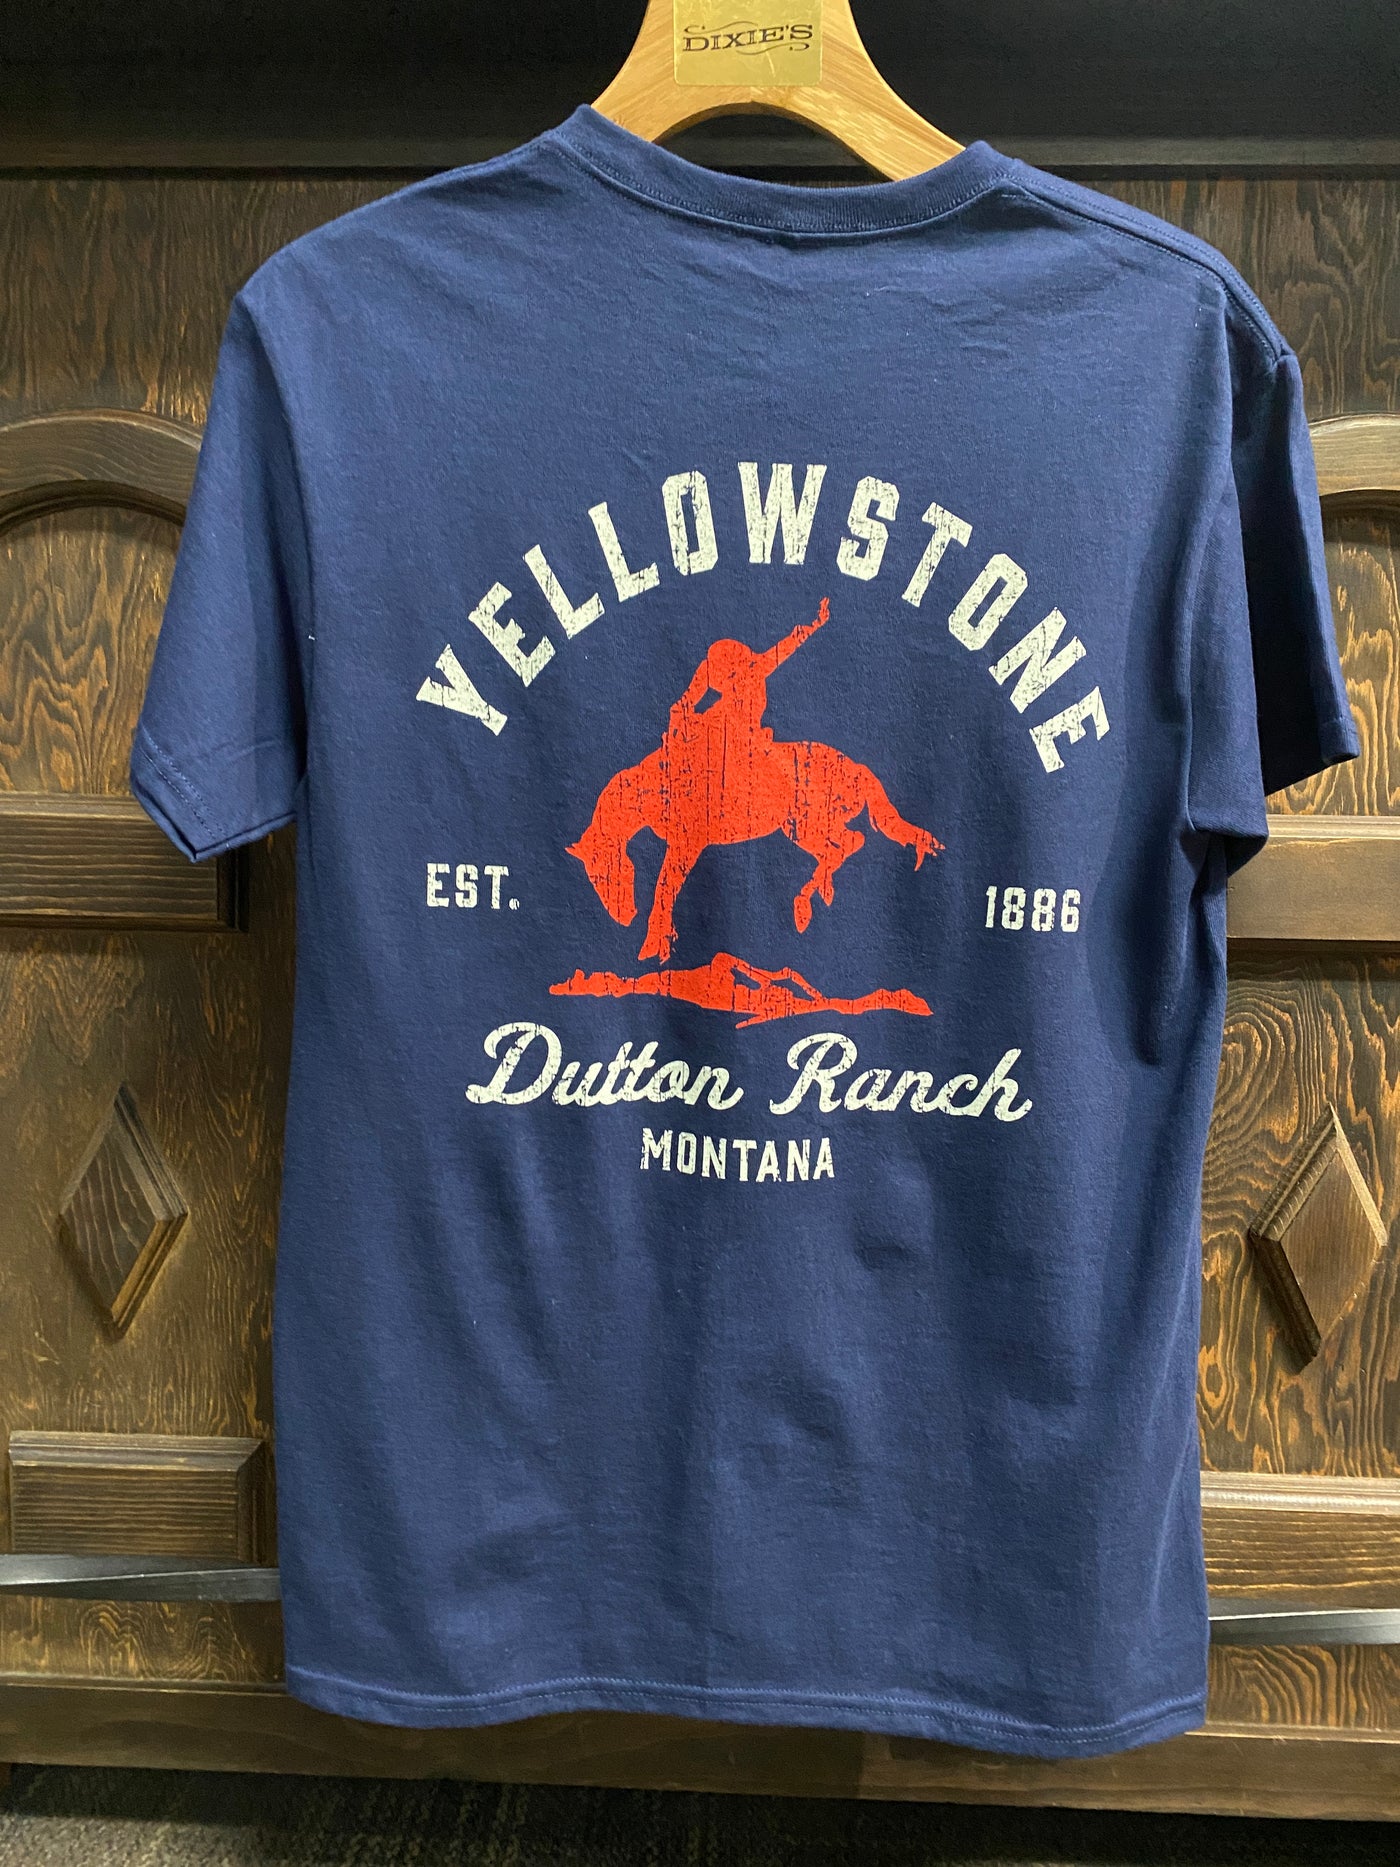 Yellowstone Bucking Horse Tee